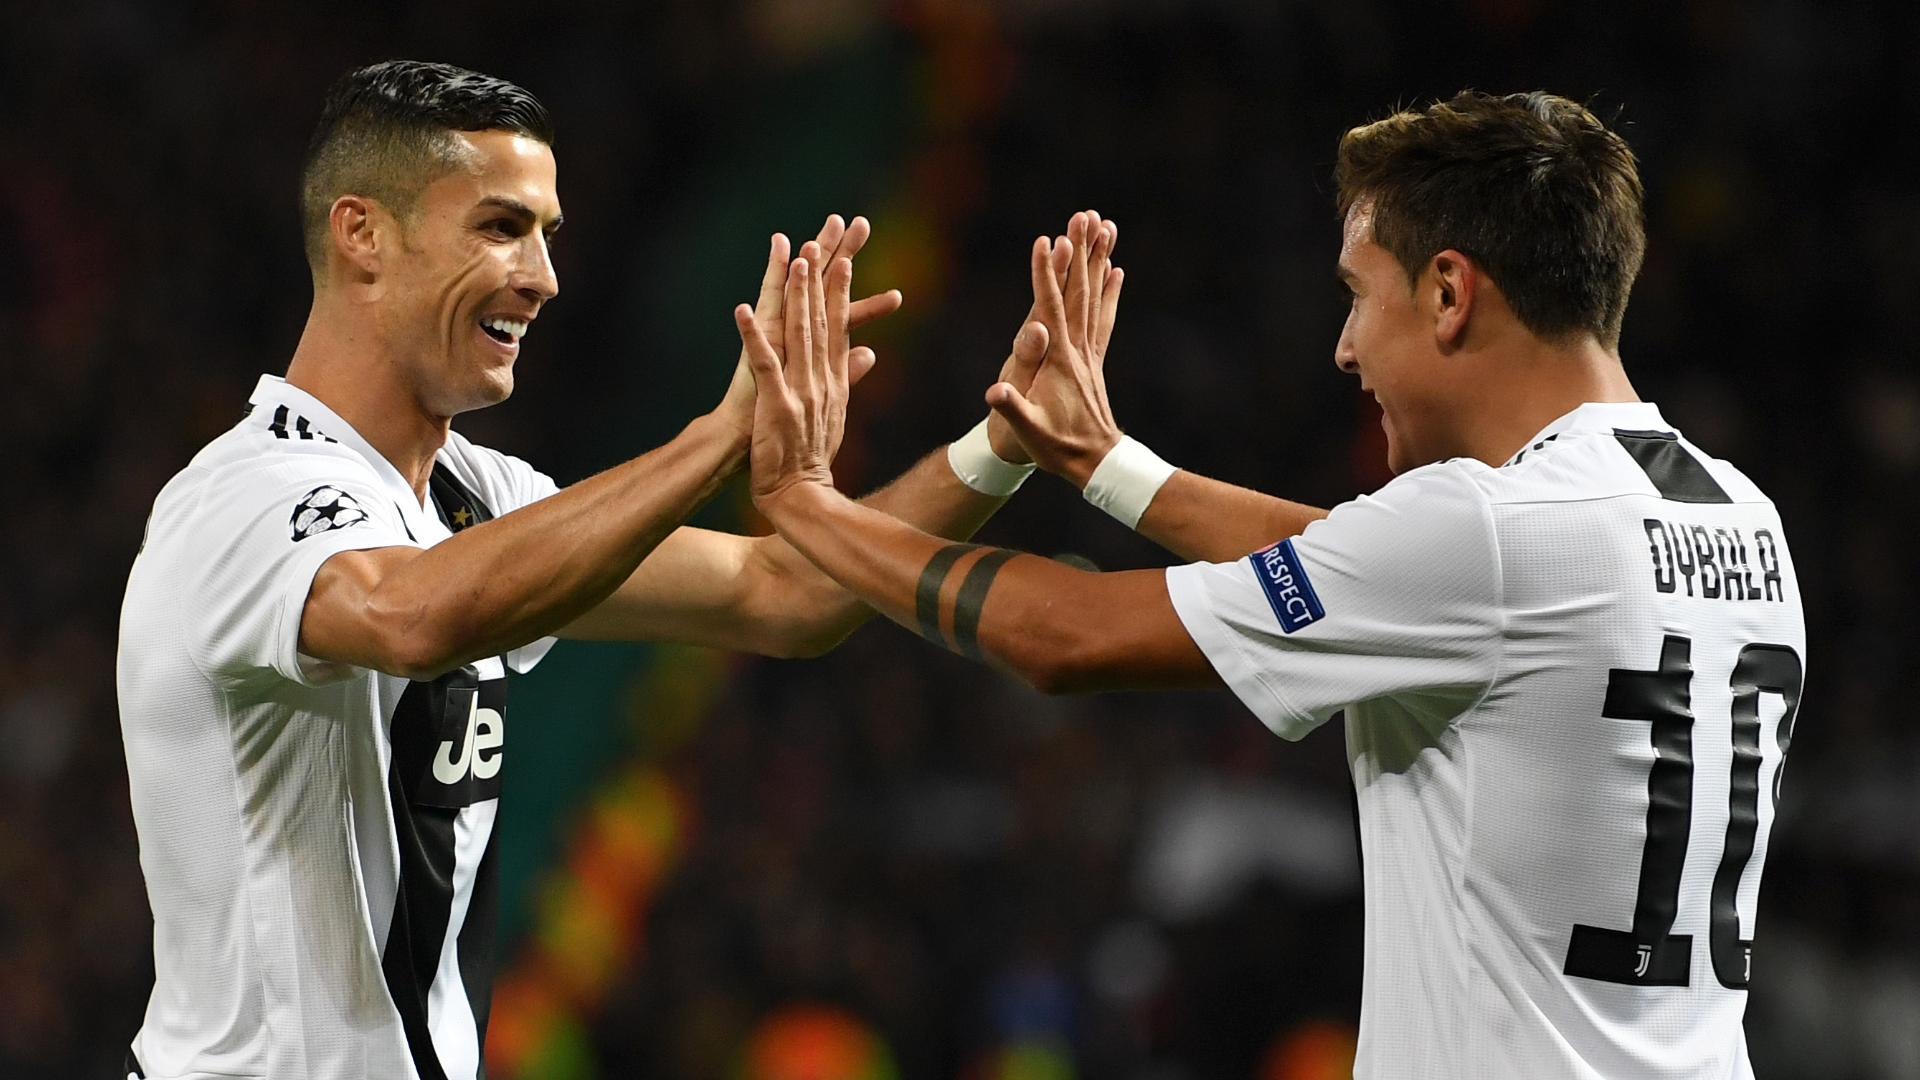 Champions League: Juventus star Paulo Dybala denies insulting